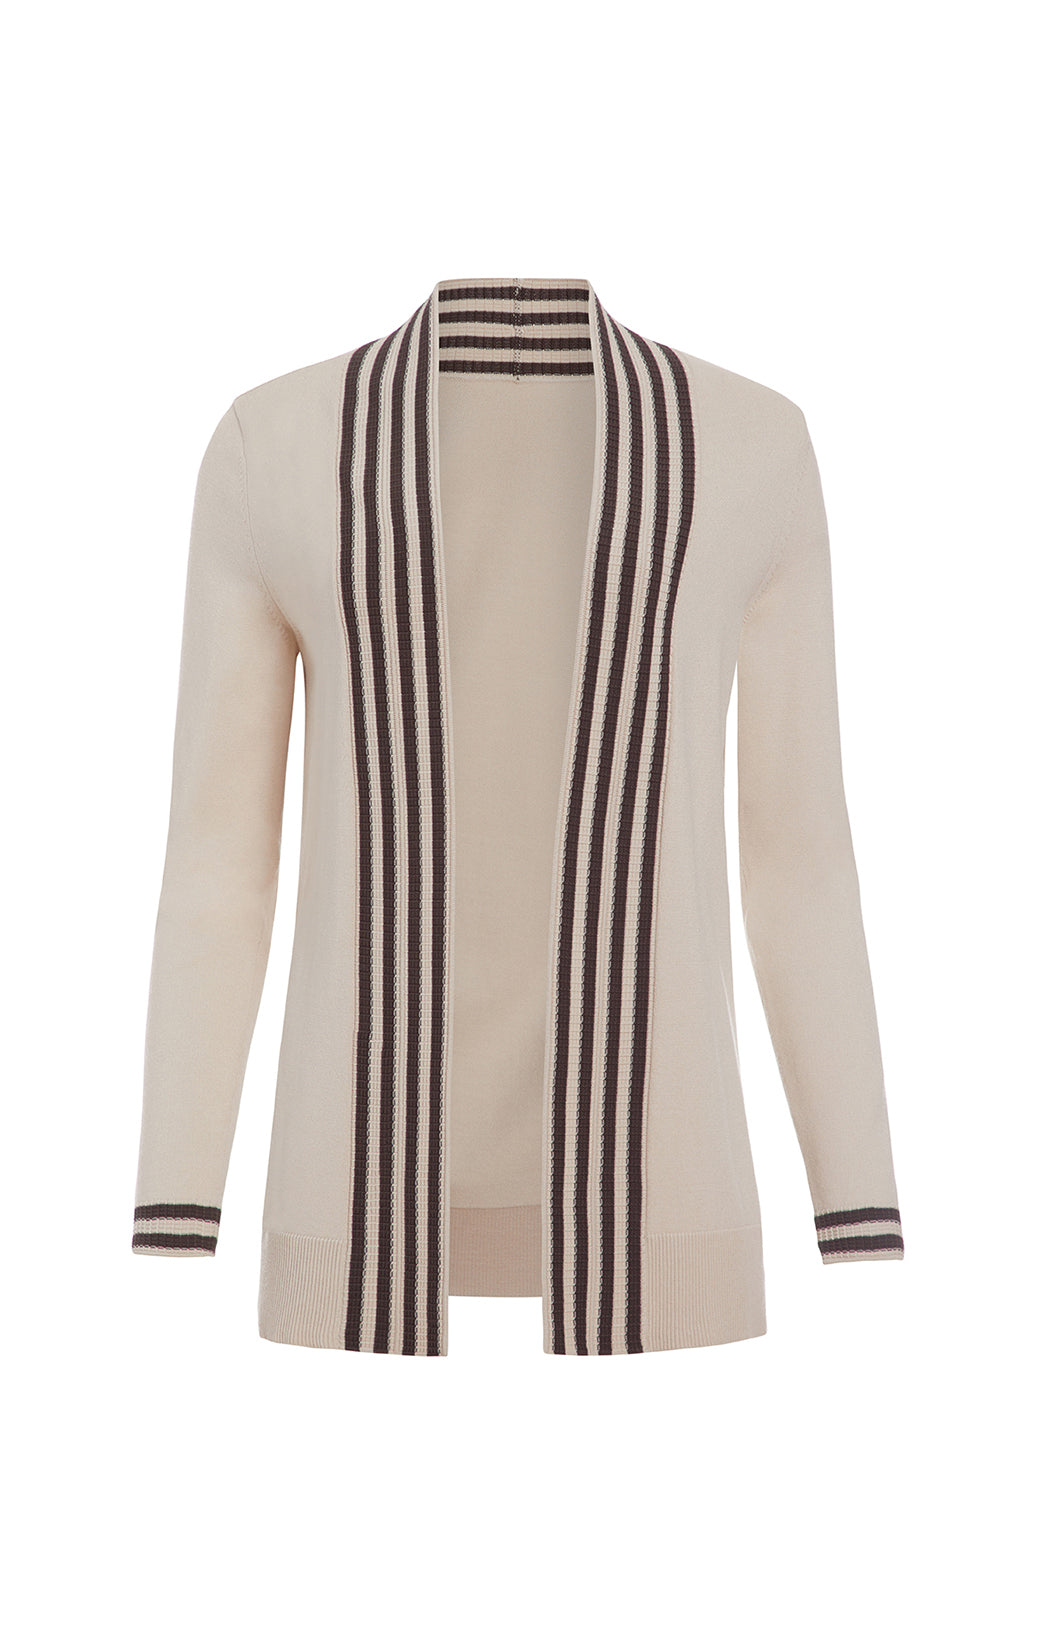 Gazelle - Rib-striped Knit Top - Product Image